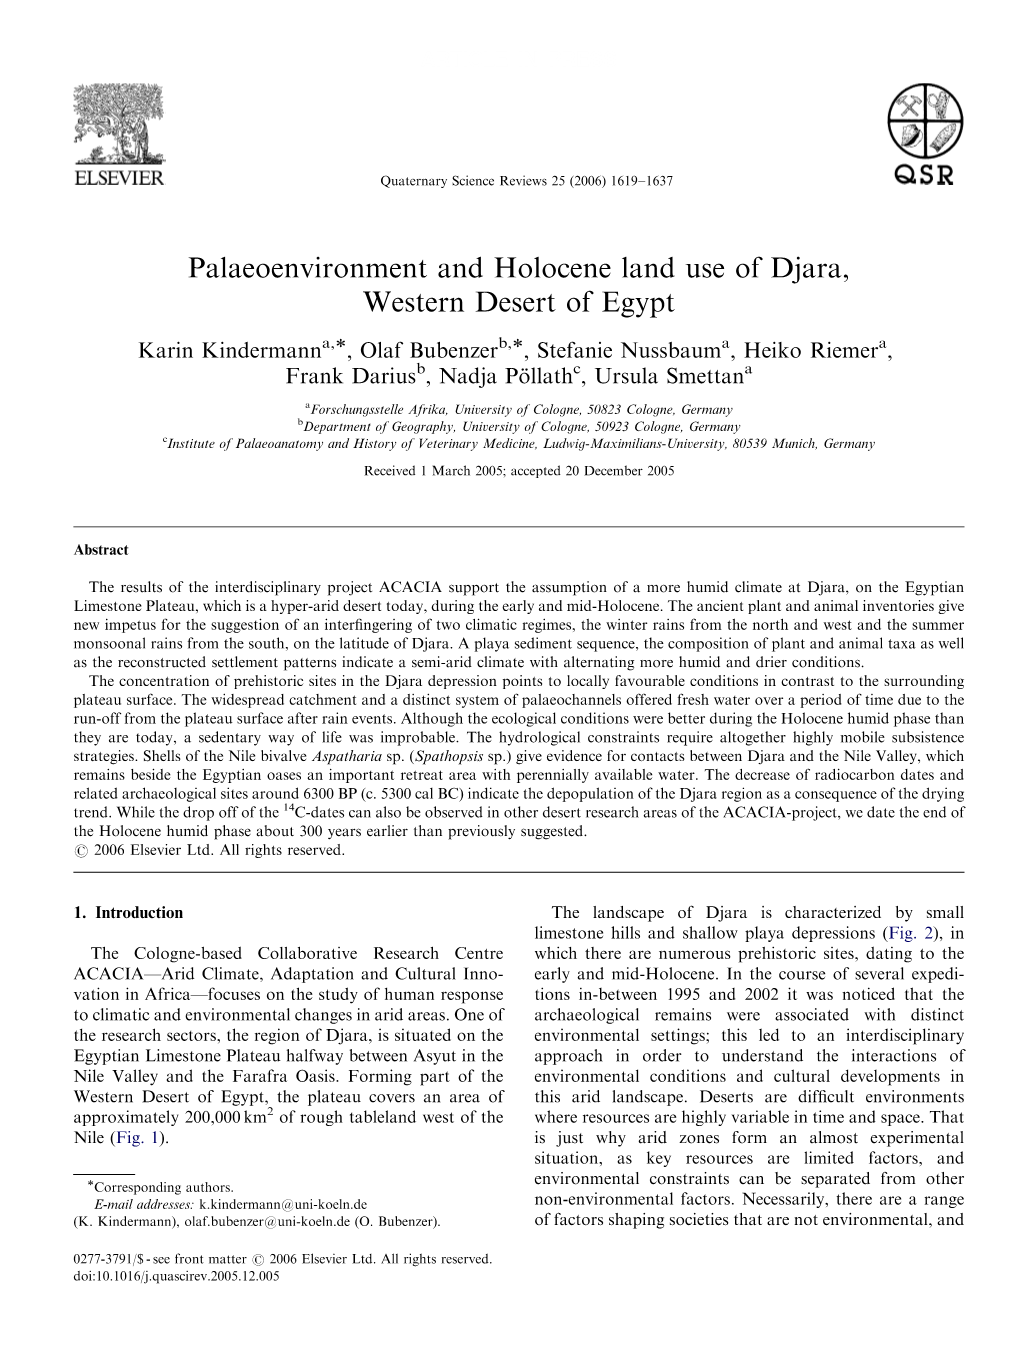 Palaeoenvironment and Holocene Land Use of Djara, Western Desert of Egypt